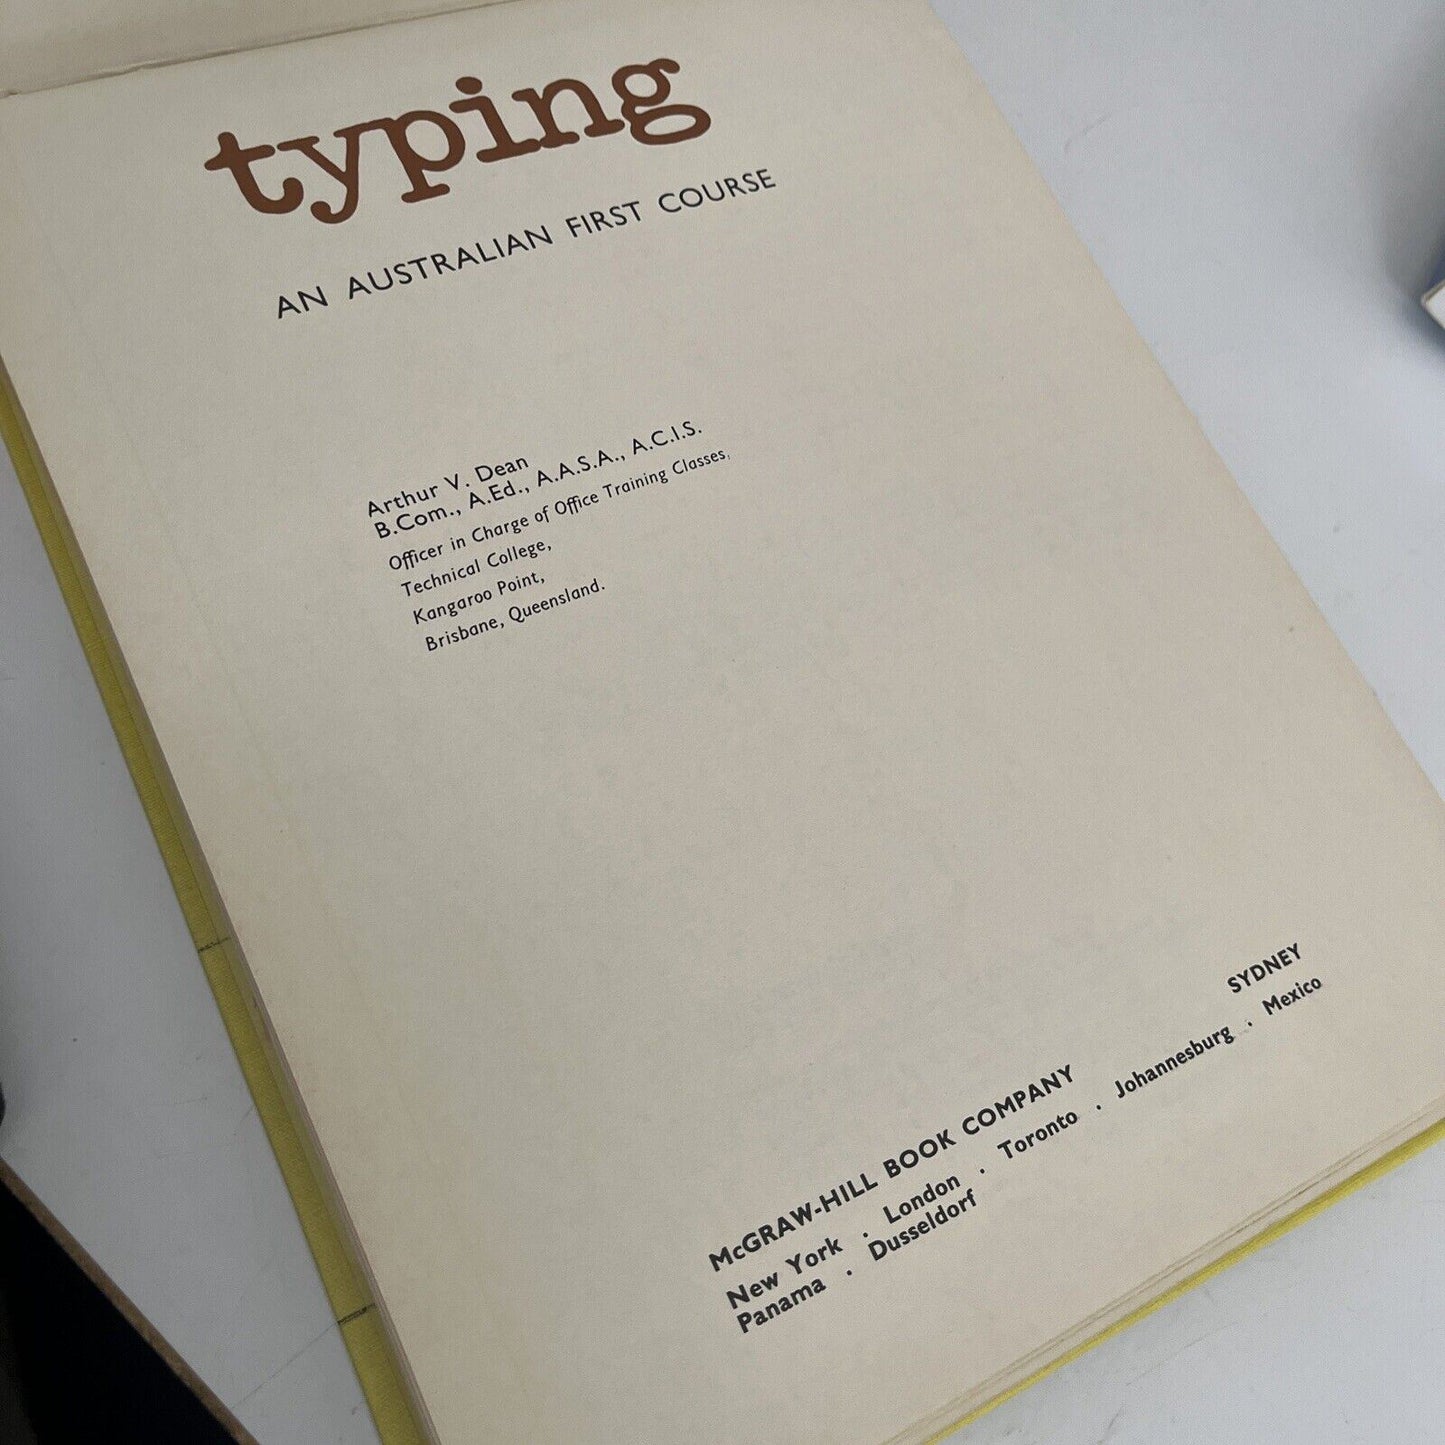 Typing - An Australian First Course by Arthur Dean 1970